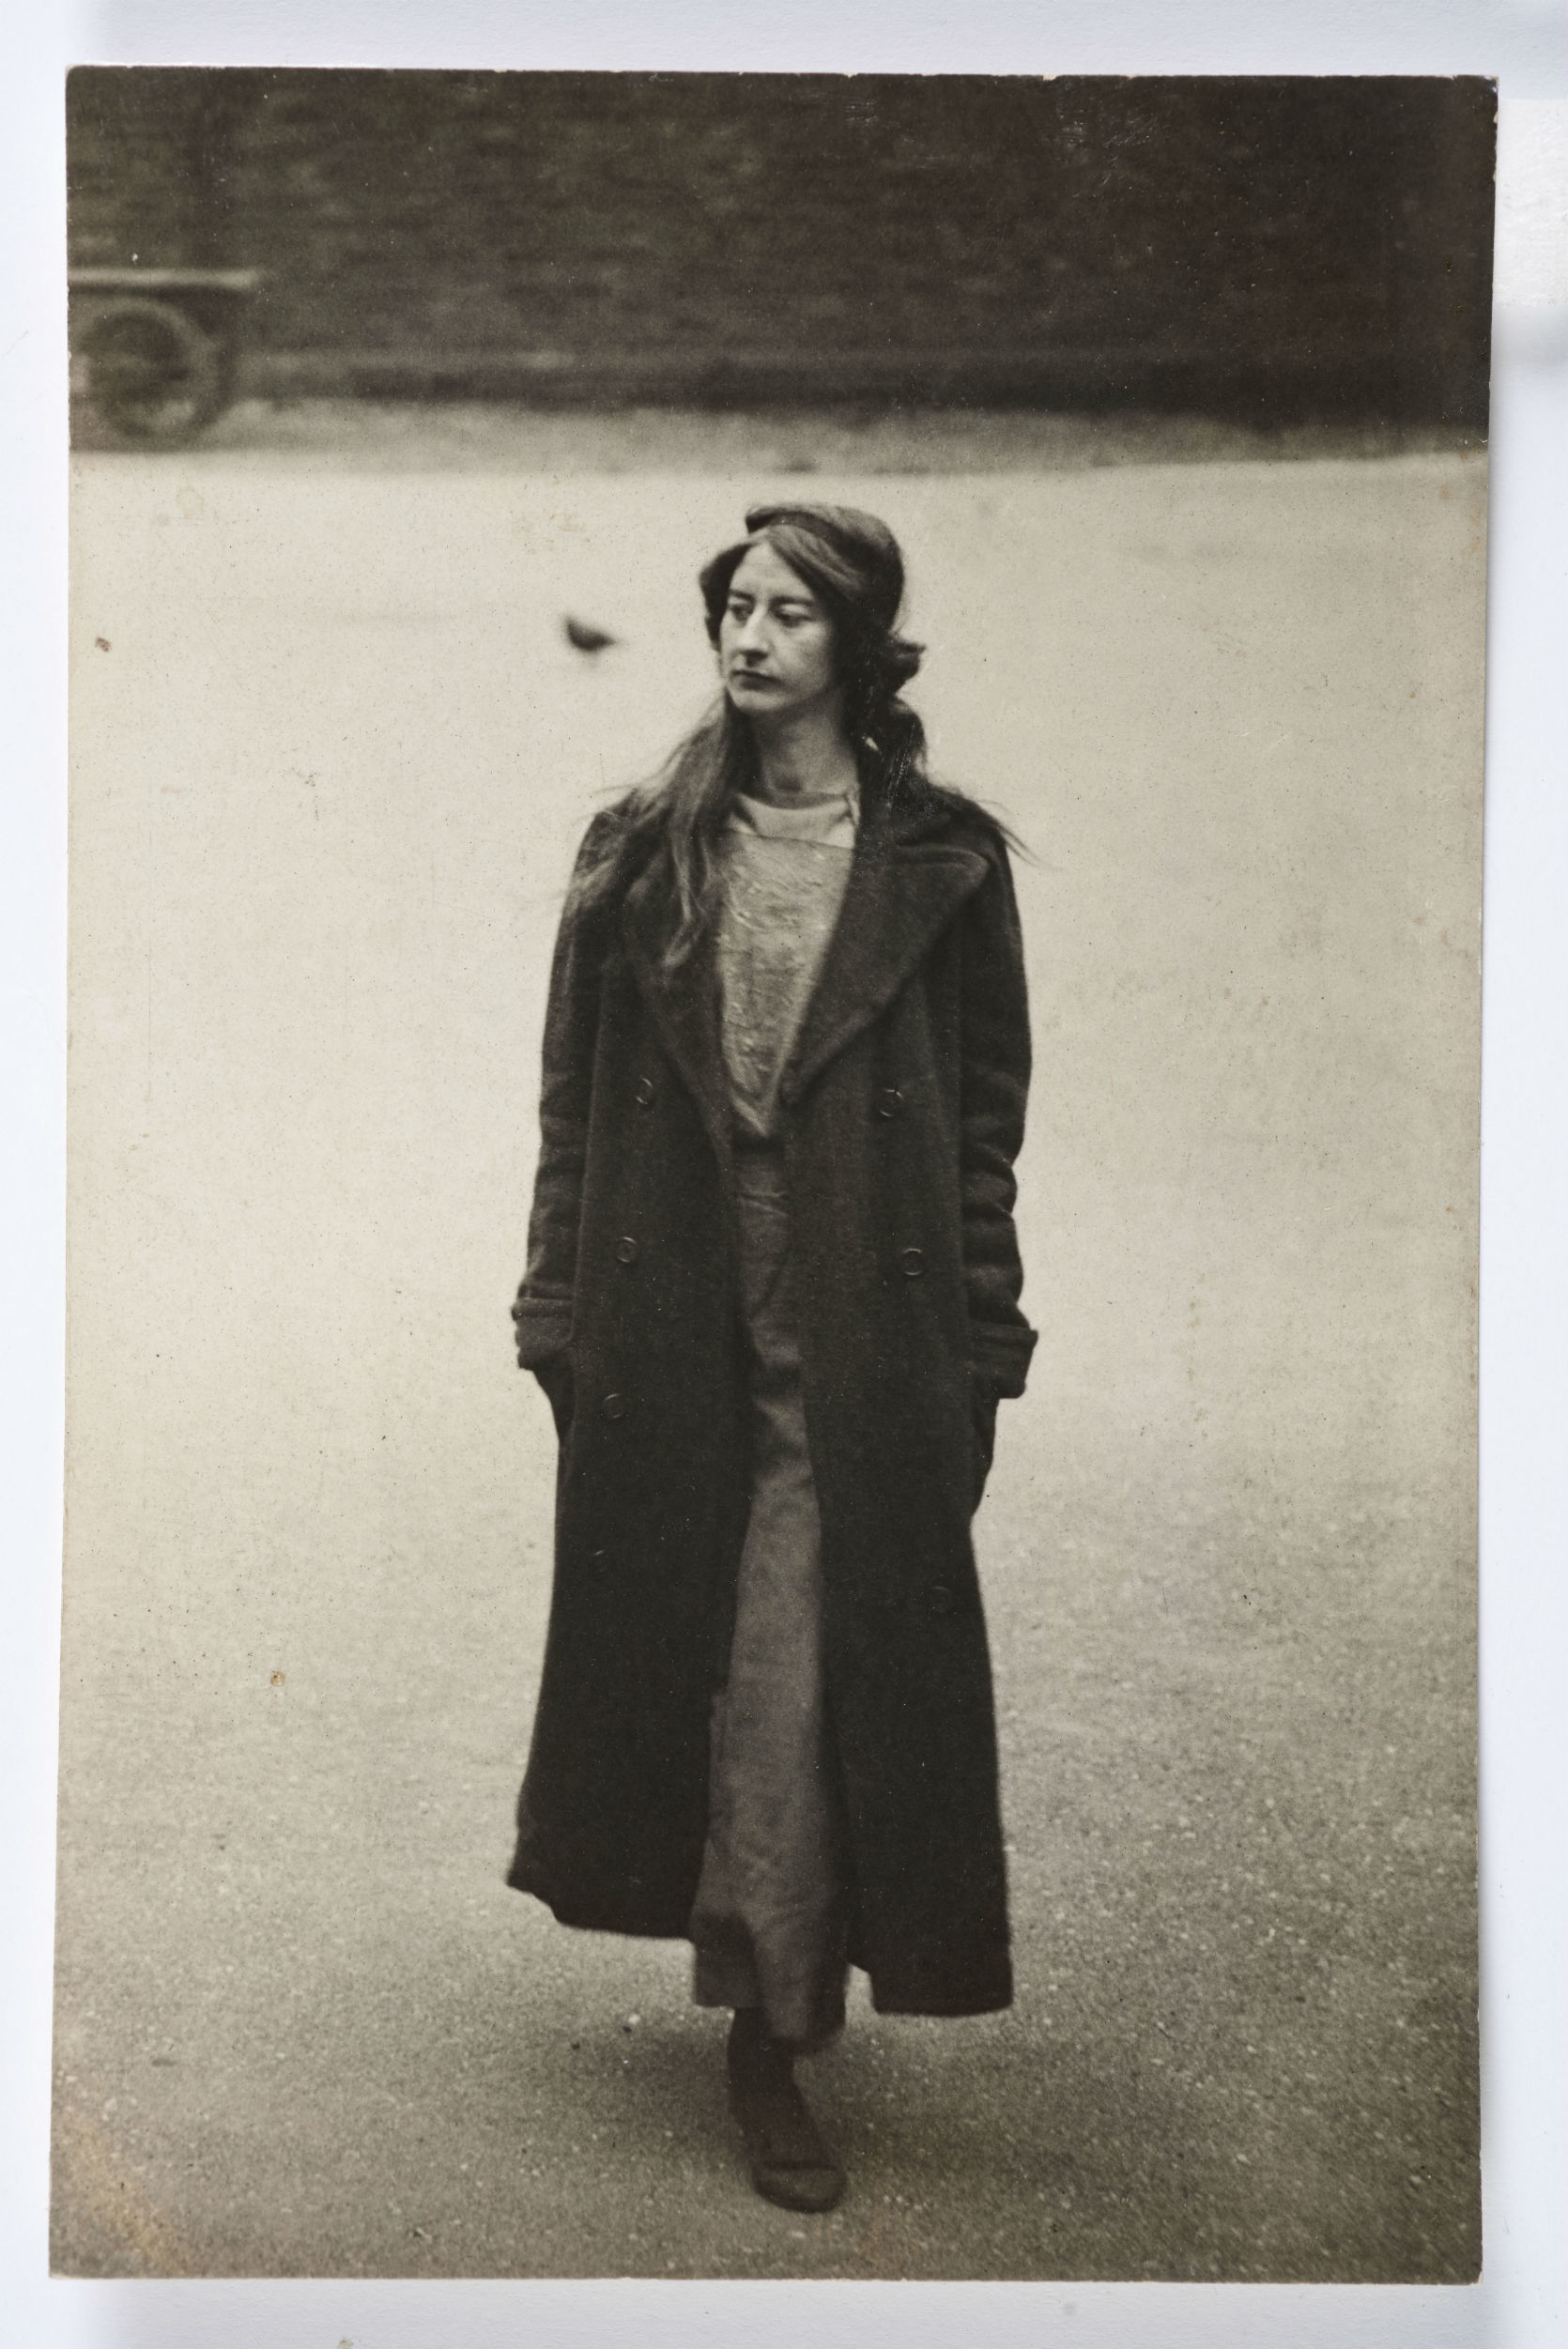 Surveillance image of the suffragette prisoner Grace Marcon, alias 'Frieda Graham 1913-1914.